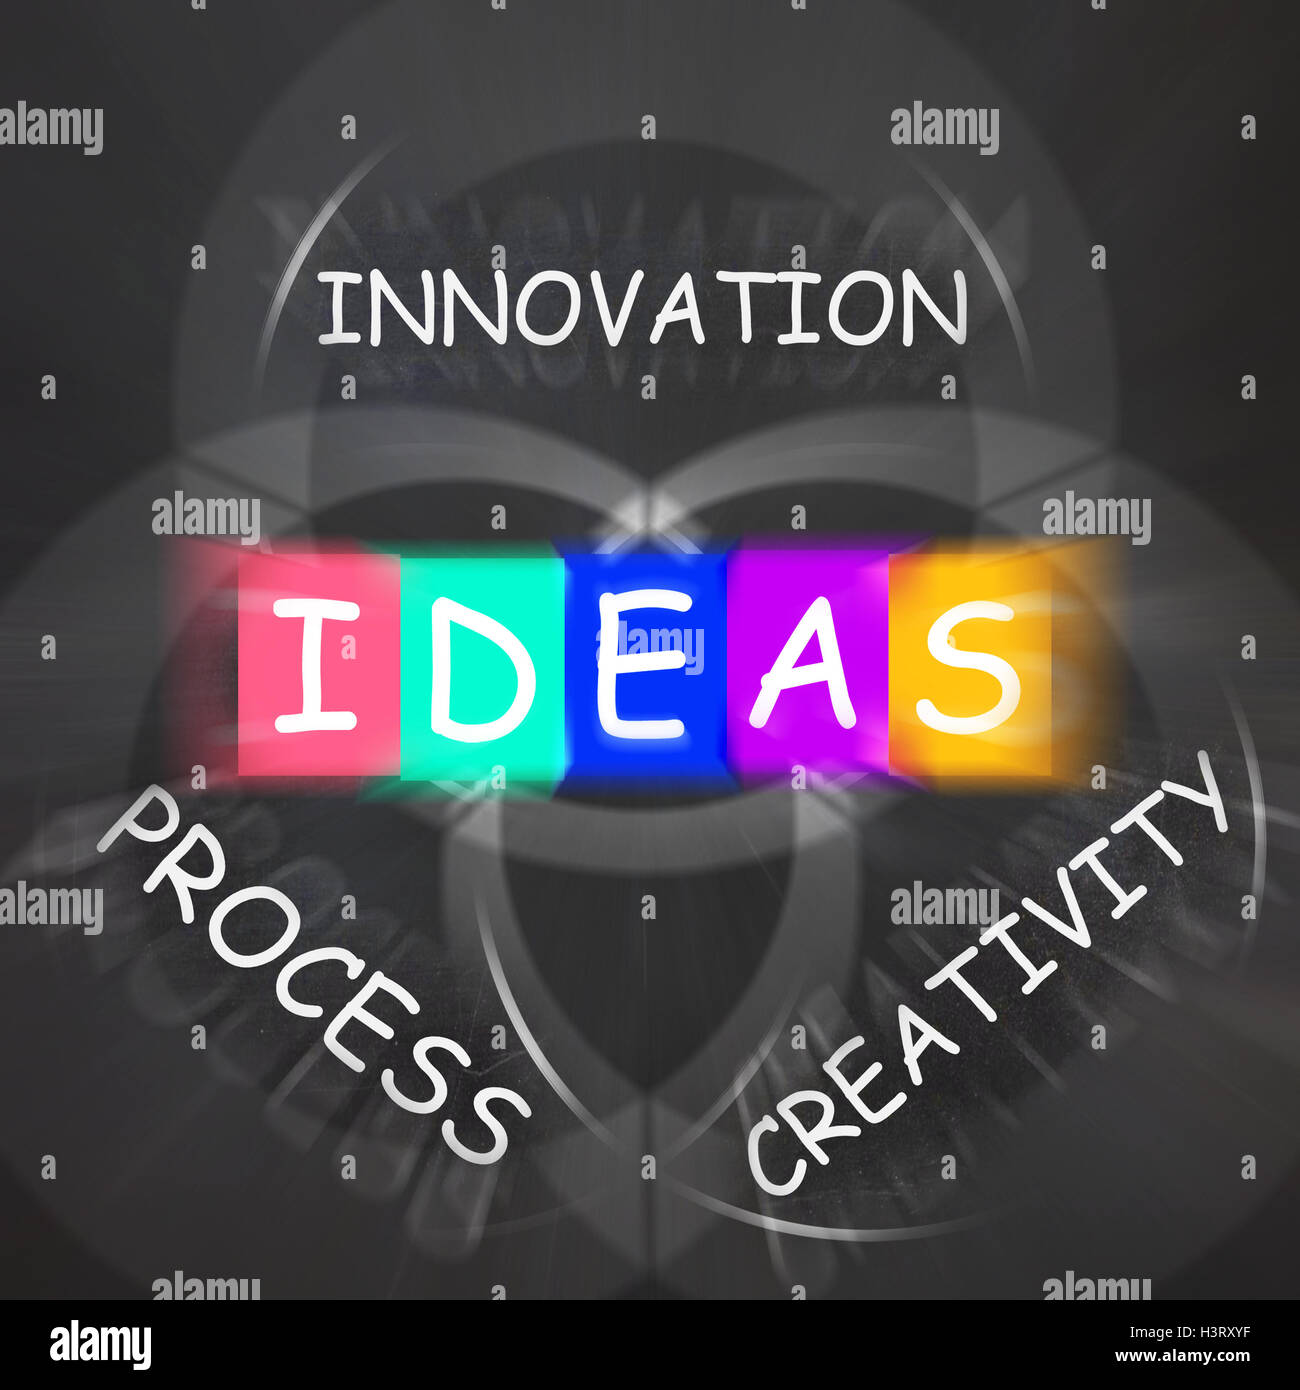 Words Displays Ideas Innovation Process and Creativity Stock Photo